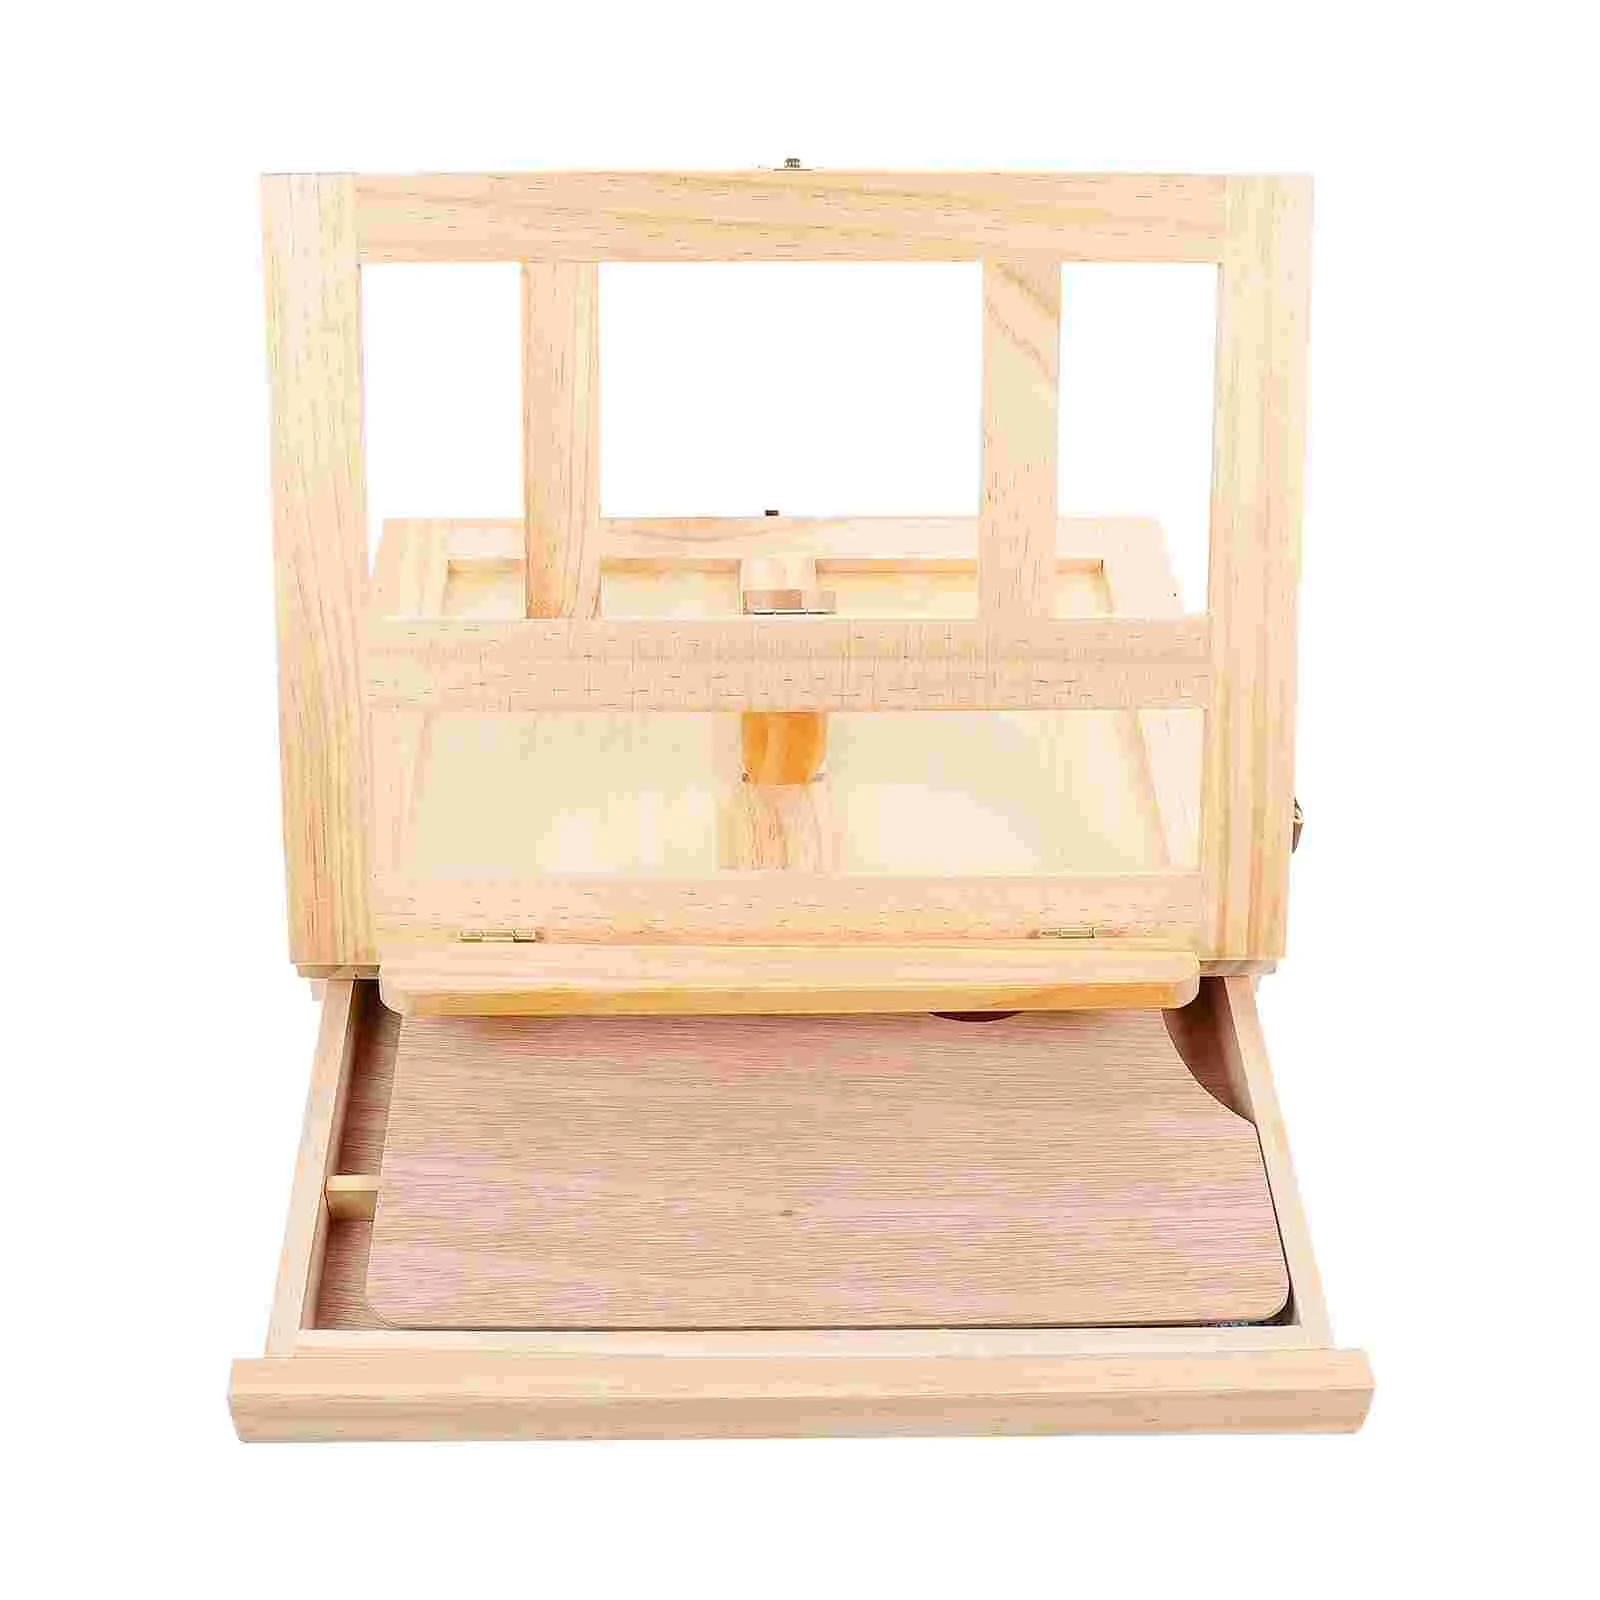 

Easel Box Wooden Table Wood Sketch Stand Painting Artist Drawing Desktop Drawer Adjustable Desk Portable Kids Board Storage Case